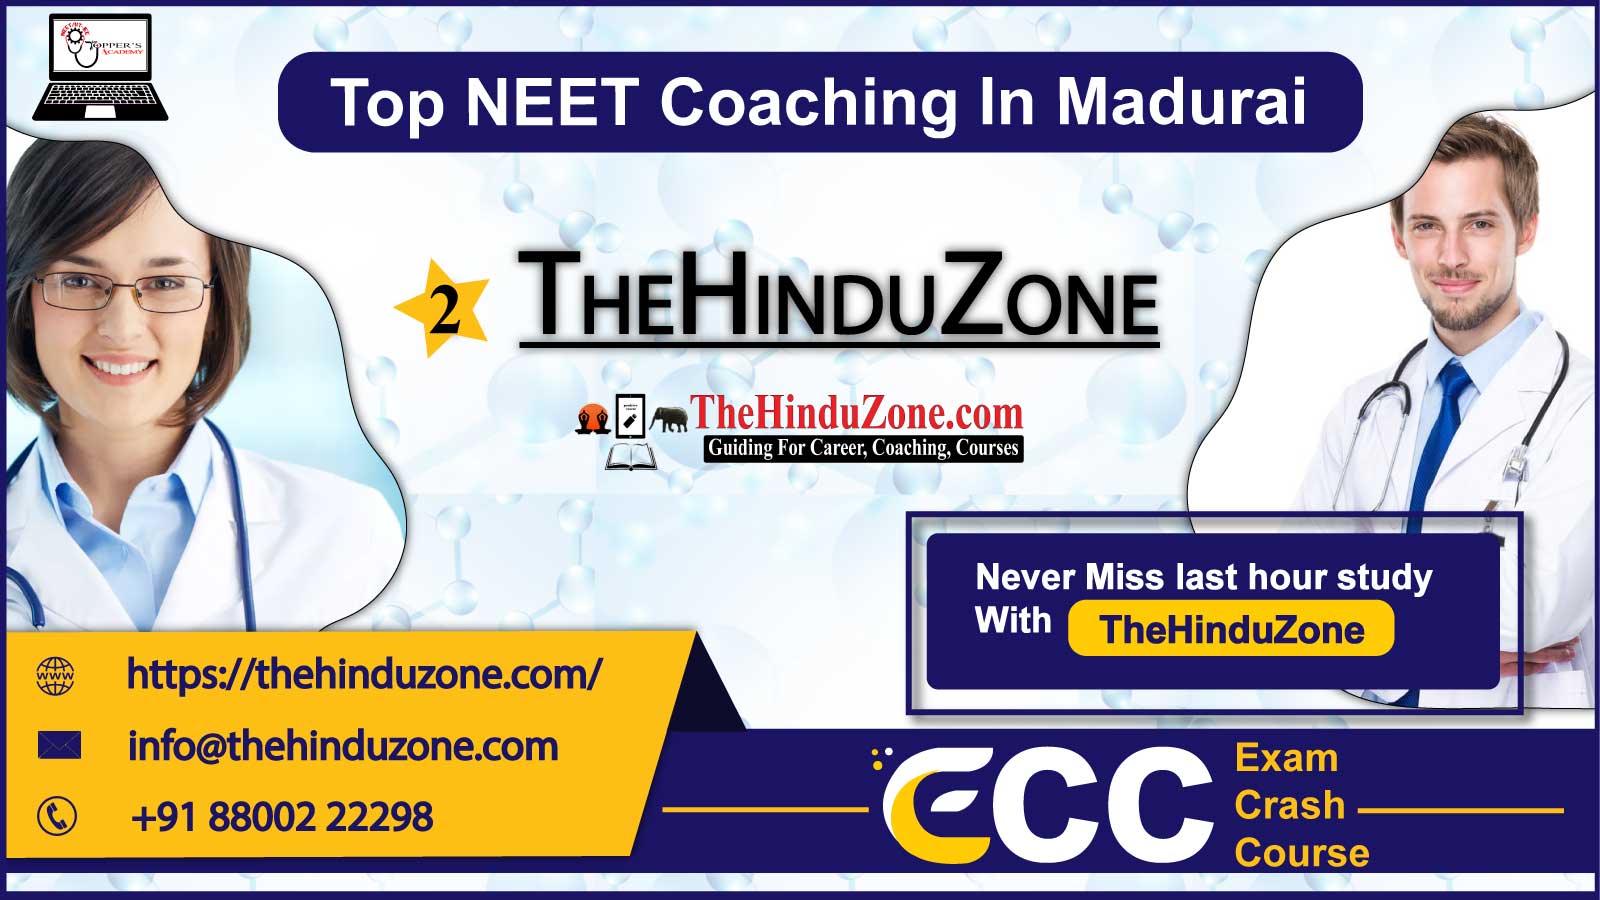 The Hinduzone NEET Coaching in Madurai